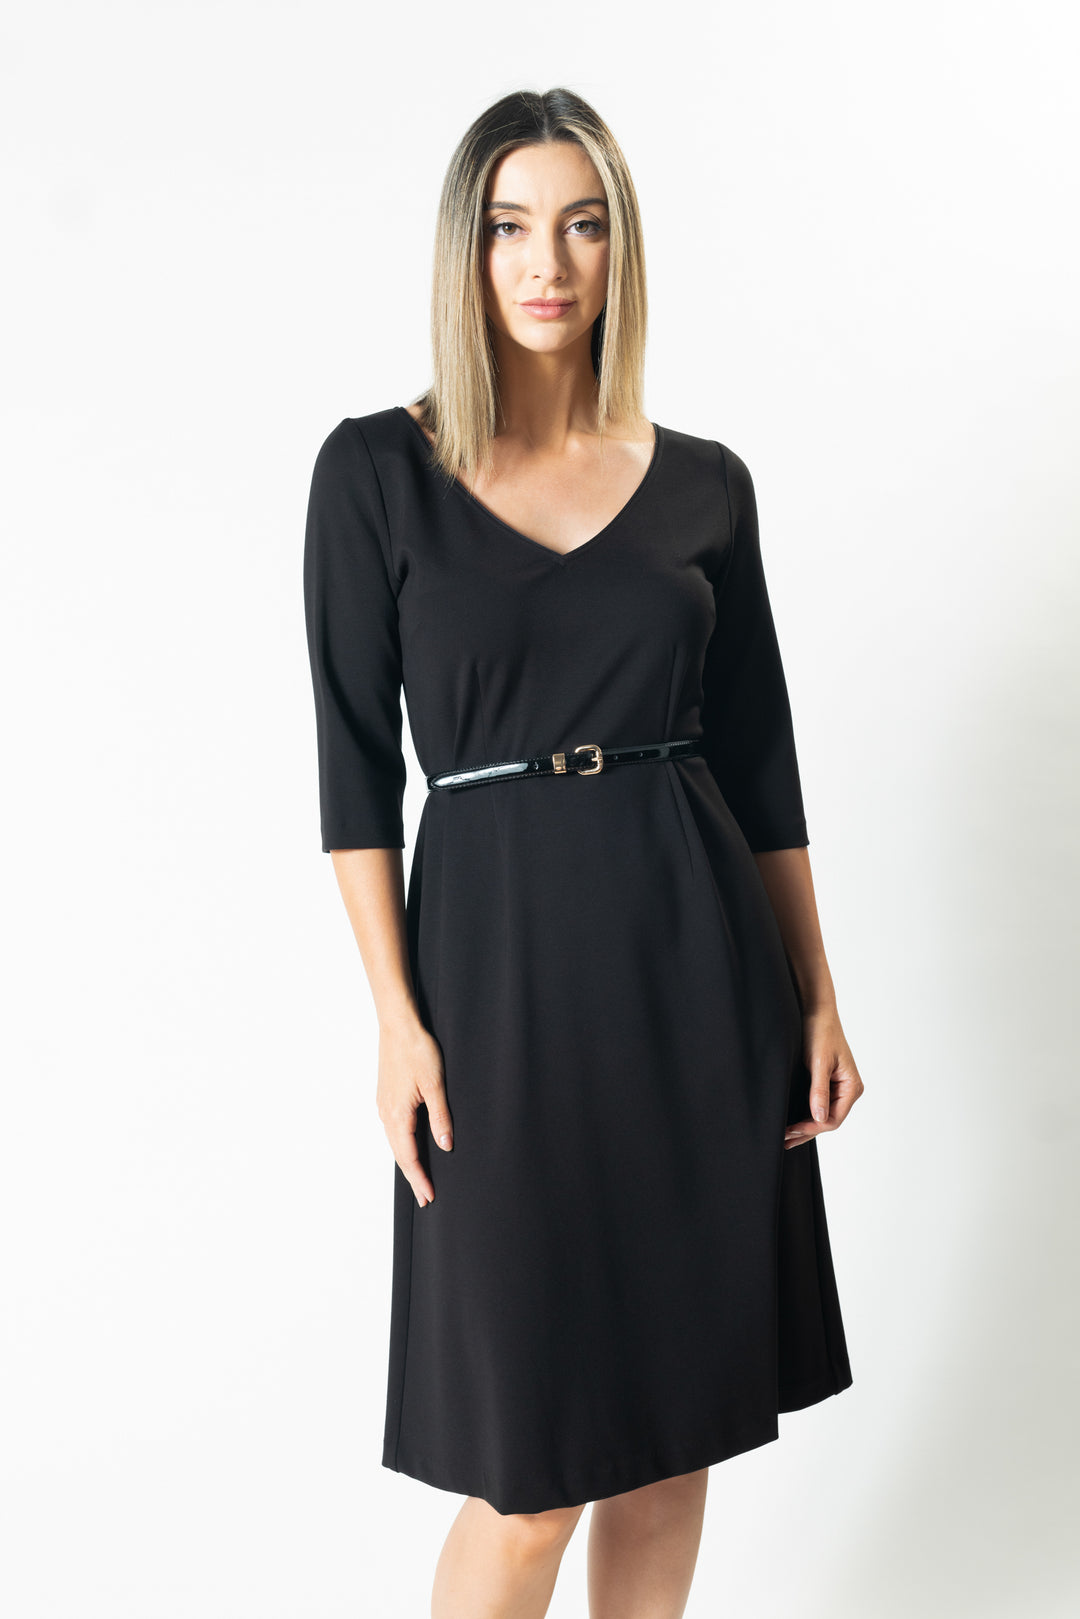 MIM 3/4 Sleeve A-Line Dress